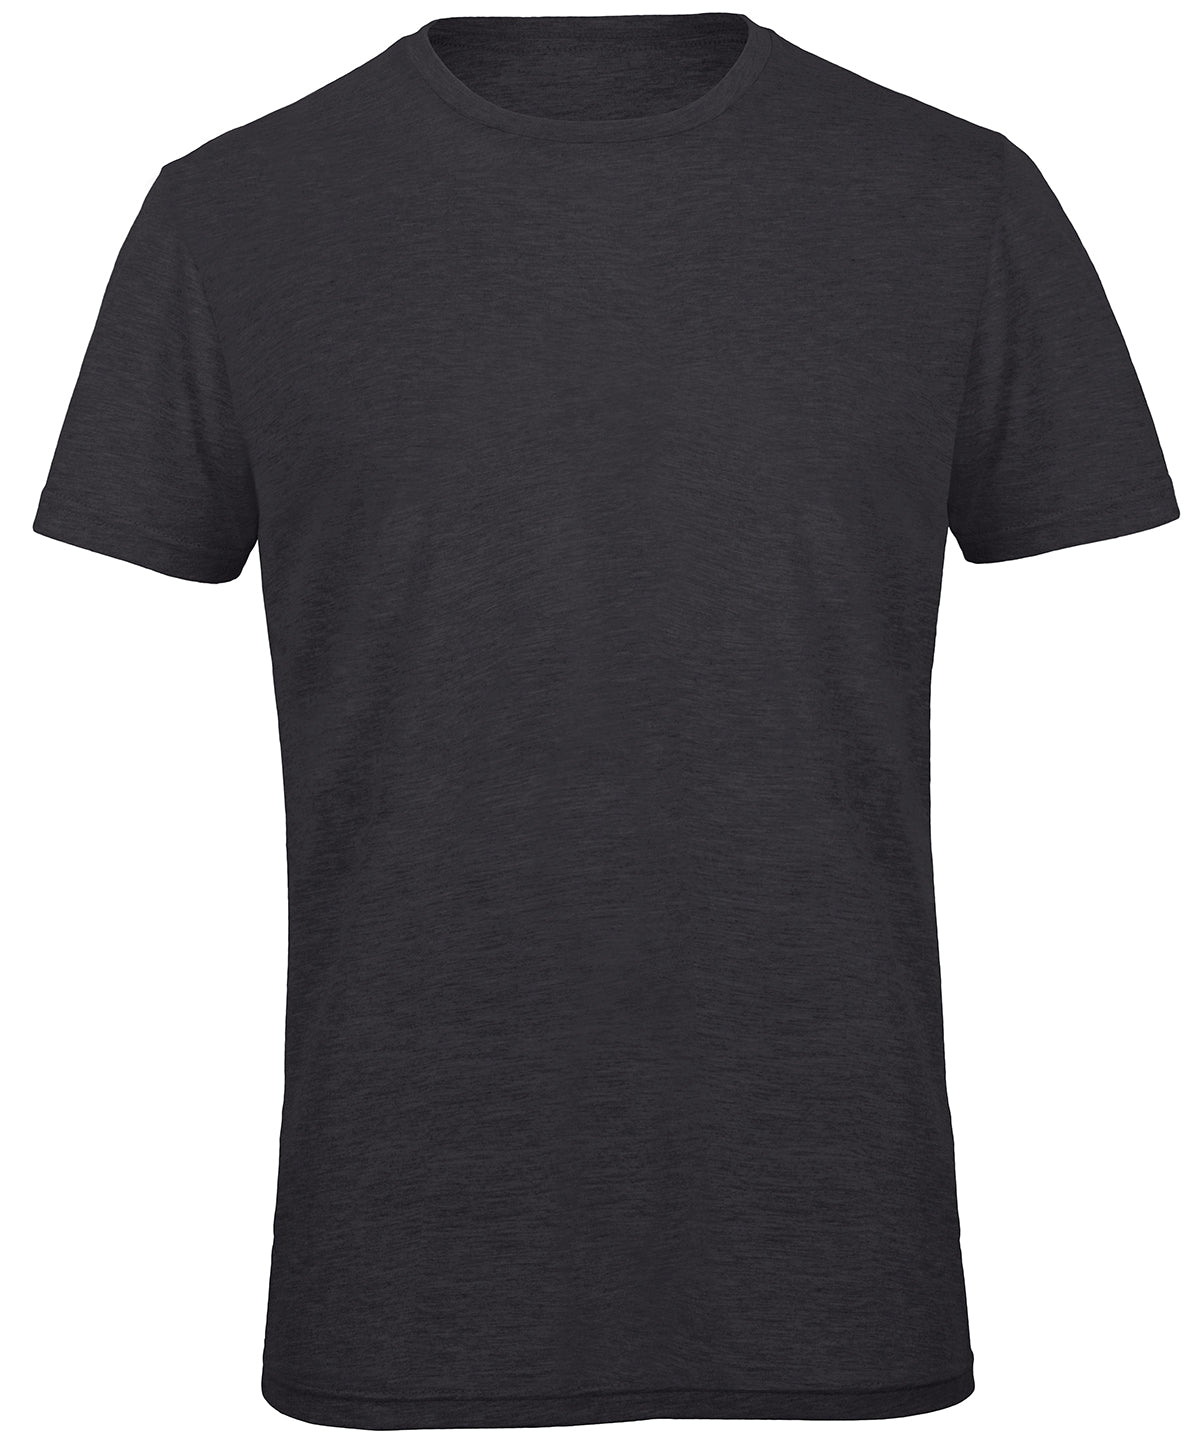 Personalised T-Shirts - Black B&C Collection B&C Triblend /men